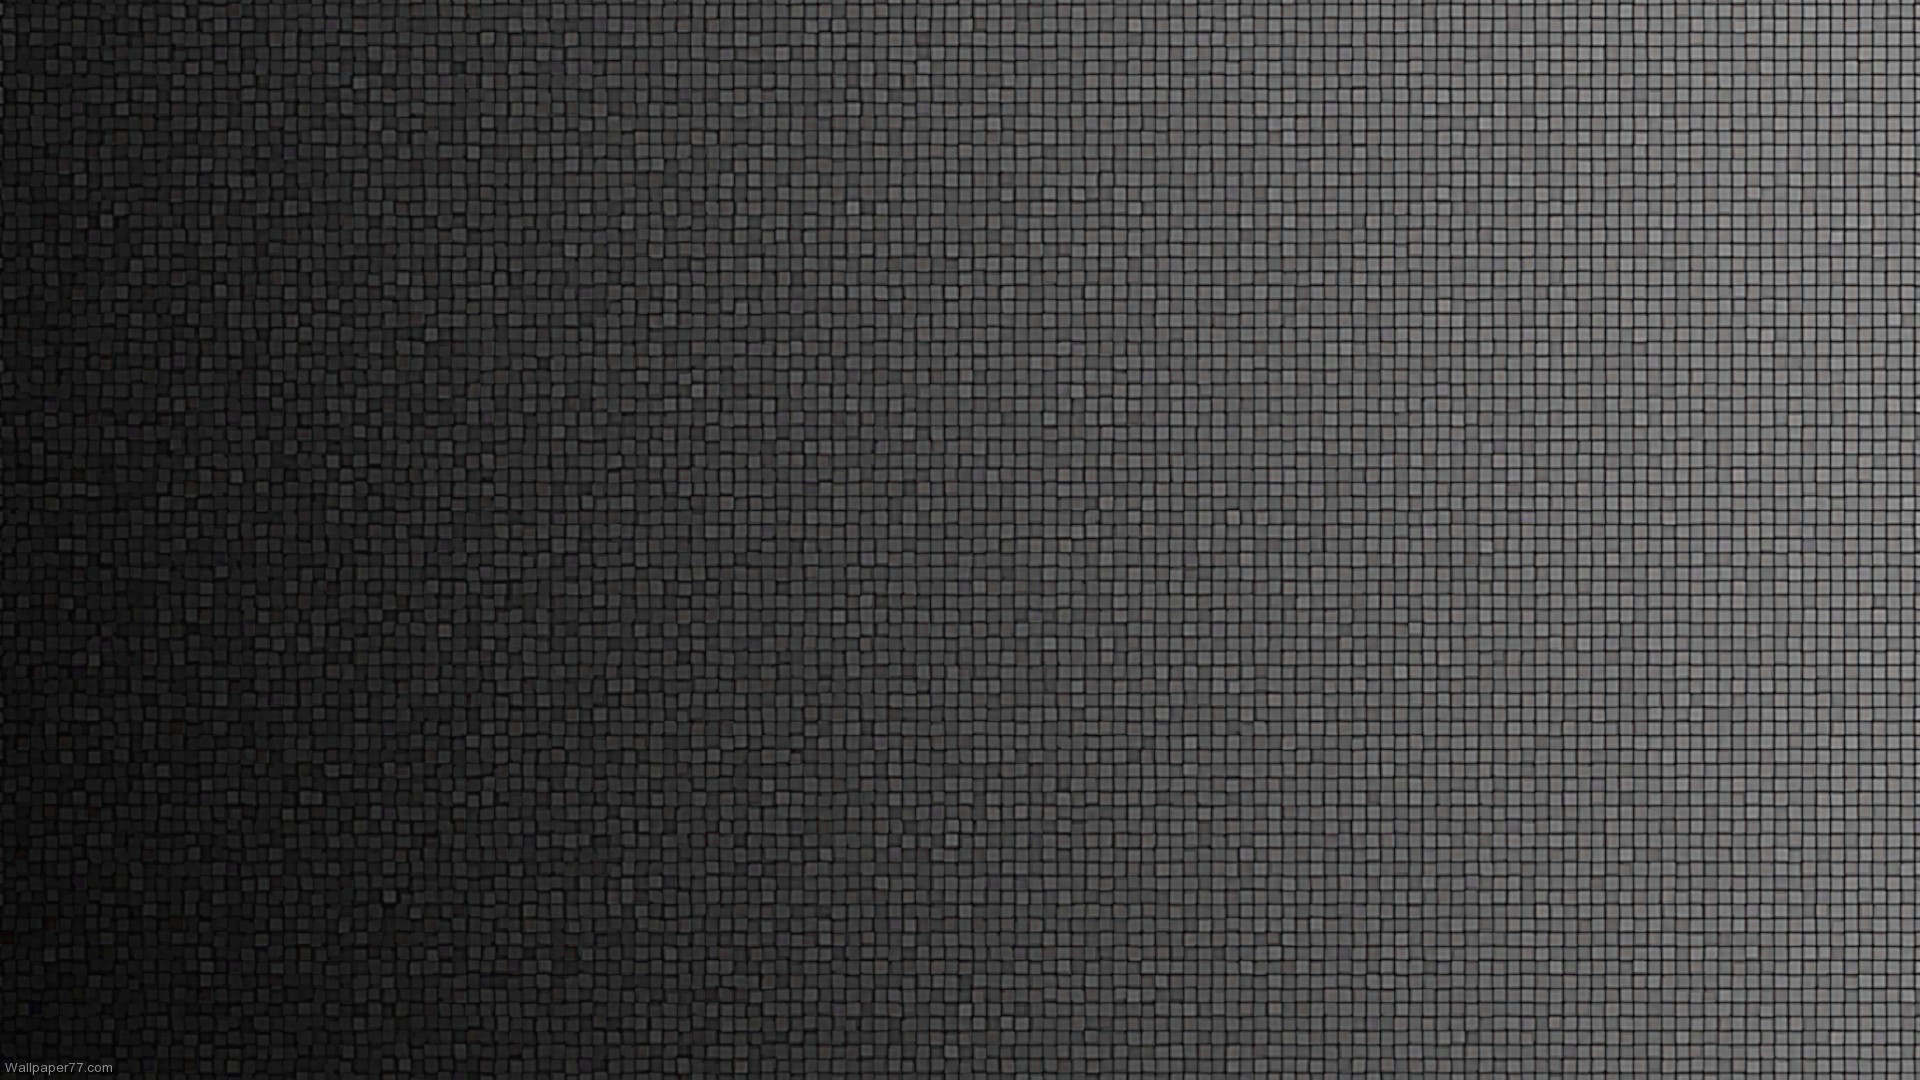 1920x1080 Retina Display Wallpaper